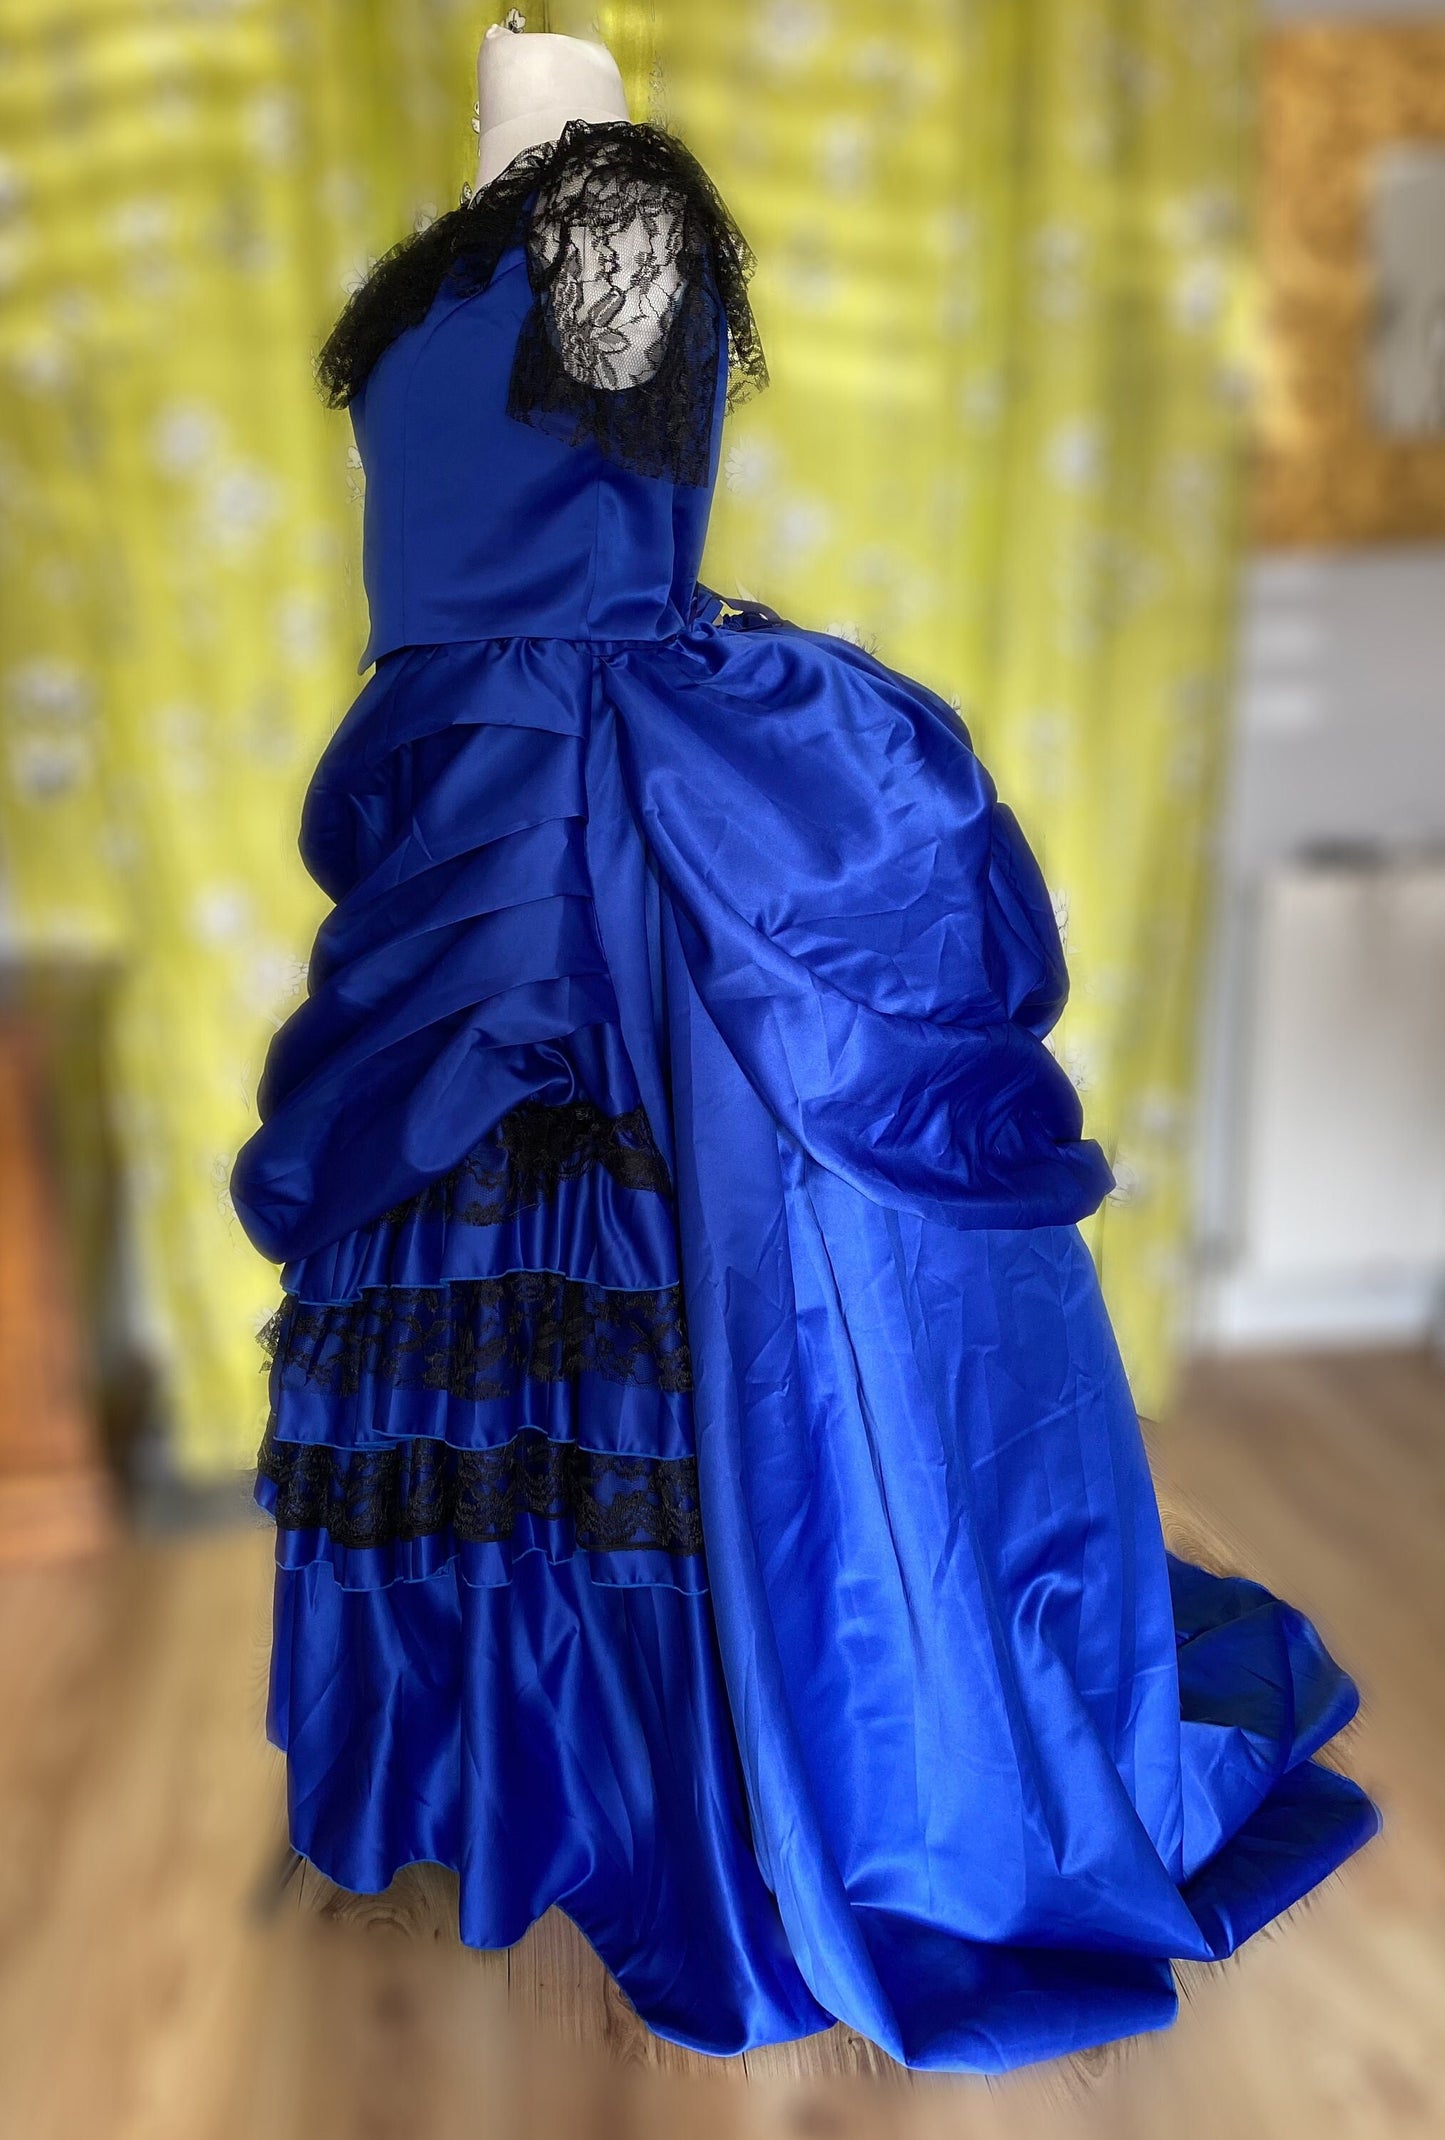 
                  
                    Blue Victorian  Bustle Dress
                  
                